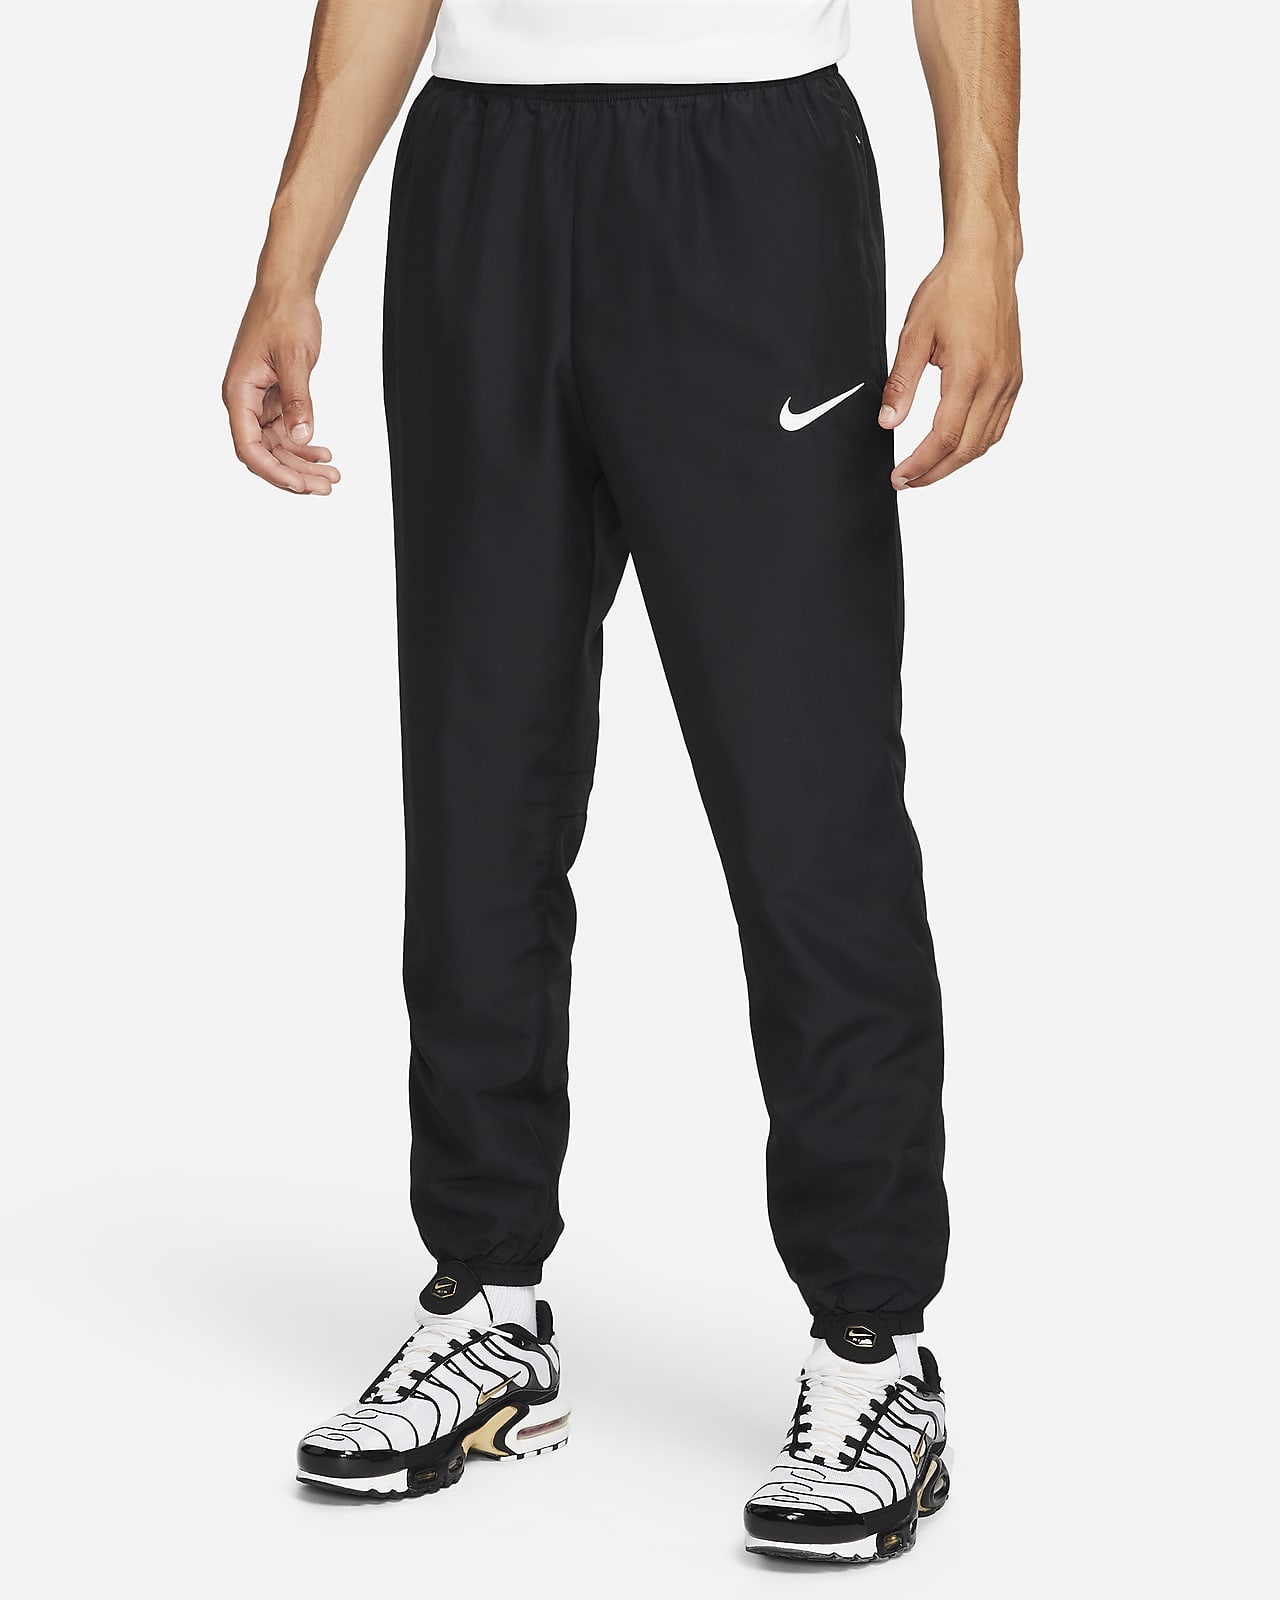 Pantaloni da calcio Dri-FIT Nike Academy – Uomo